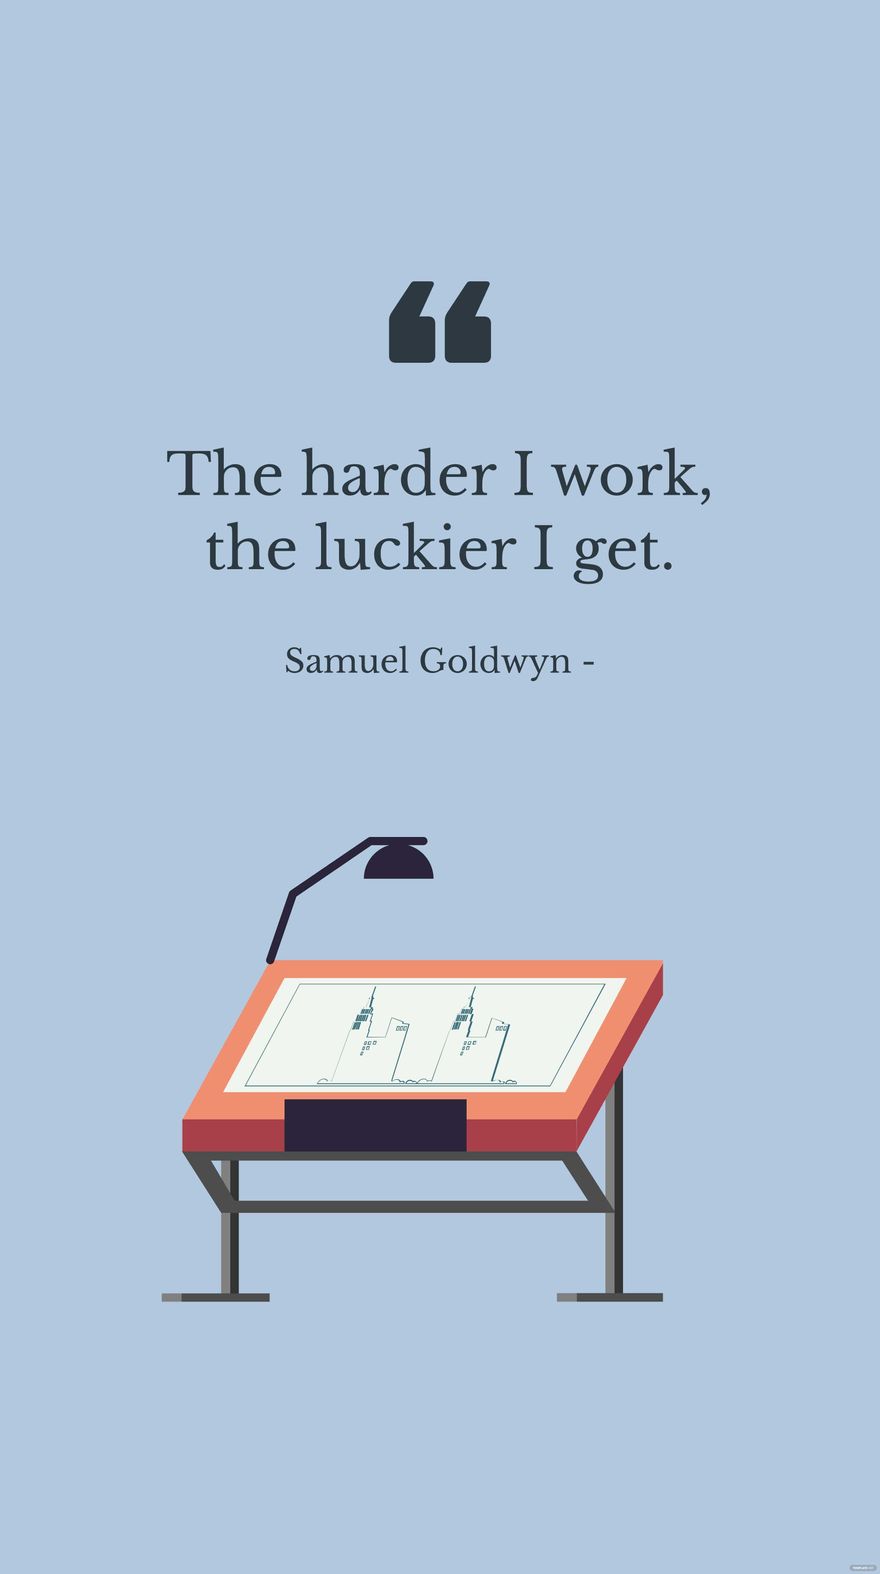 Samuel Goldwyn - The harder I work, the luckier I get.